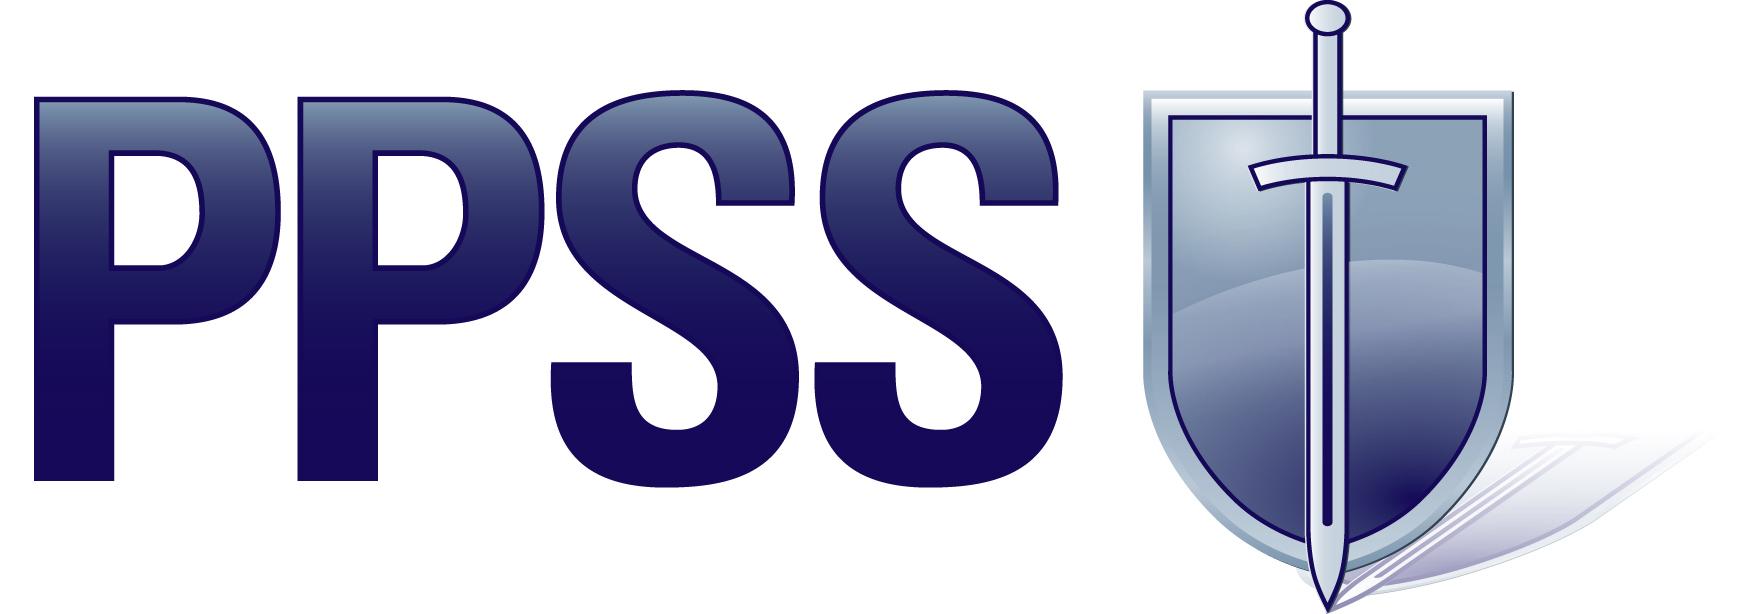 ppss_logo_standard_issue